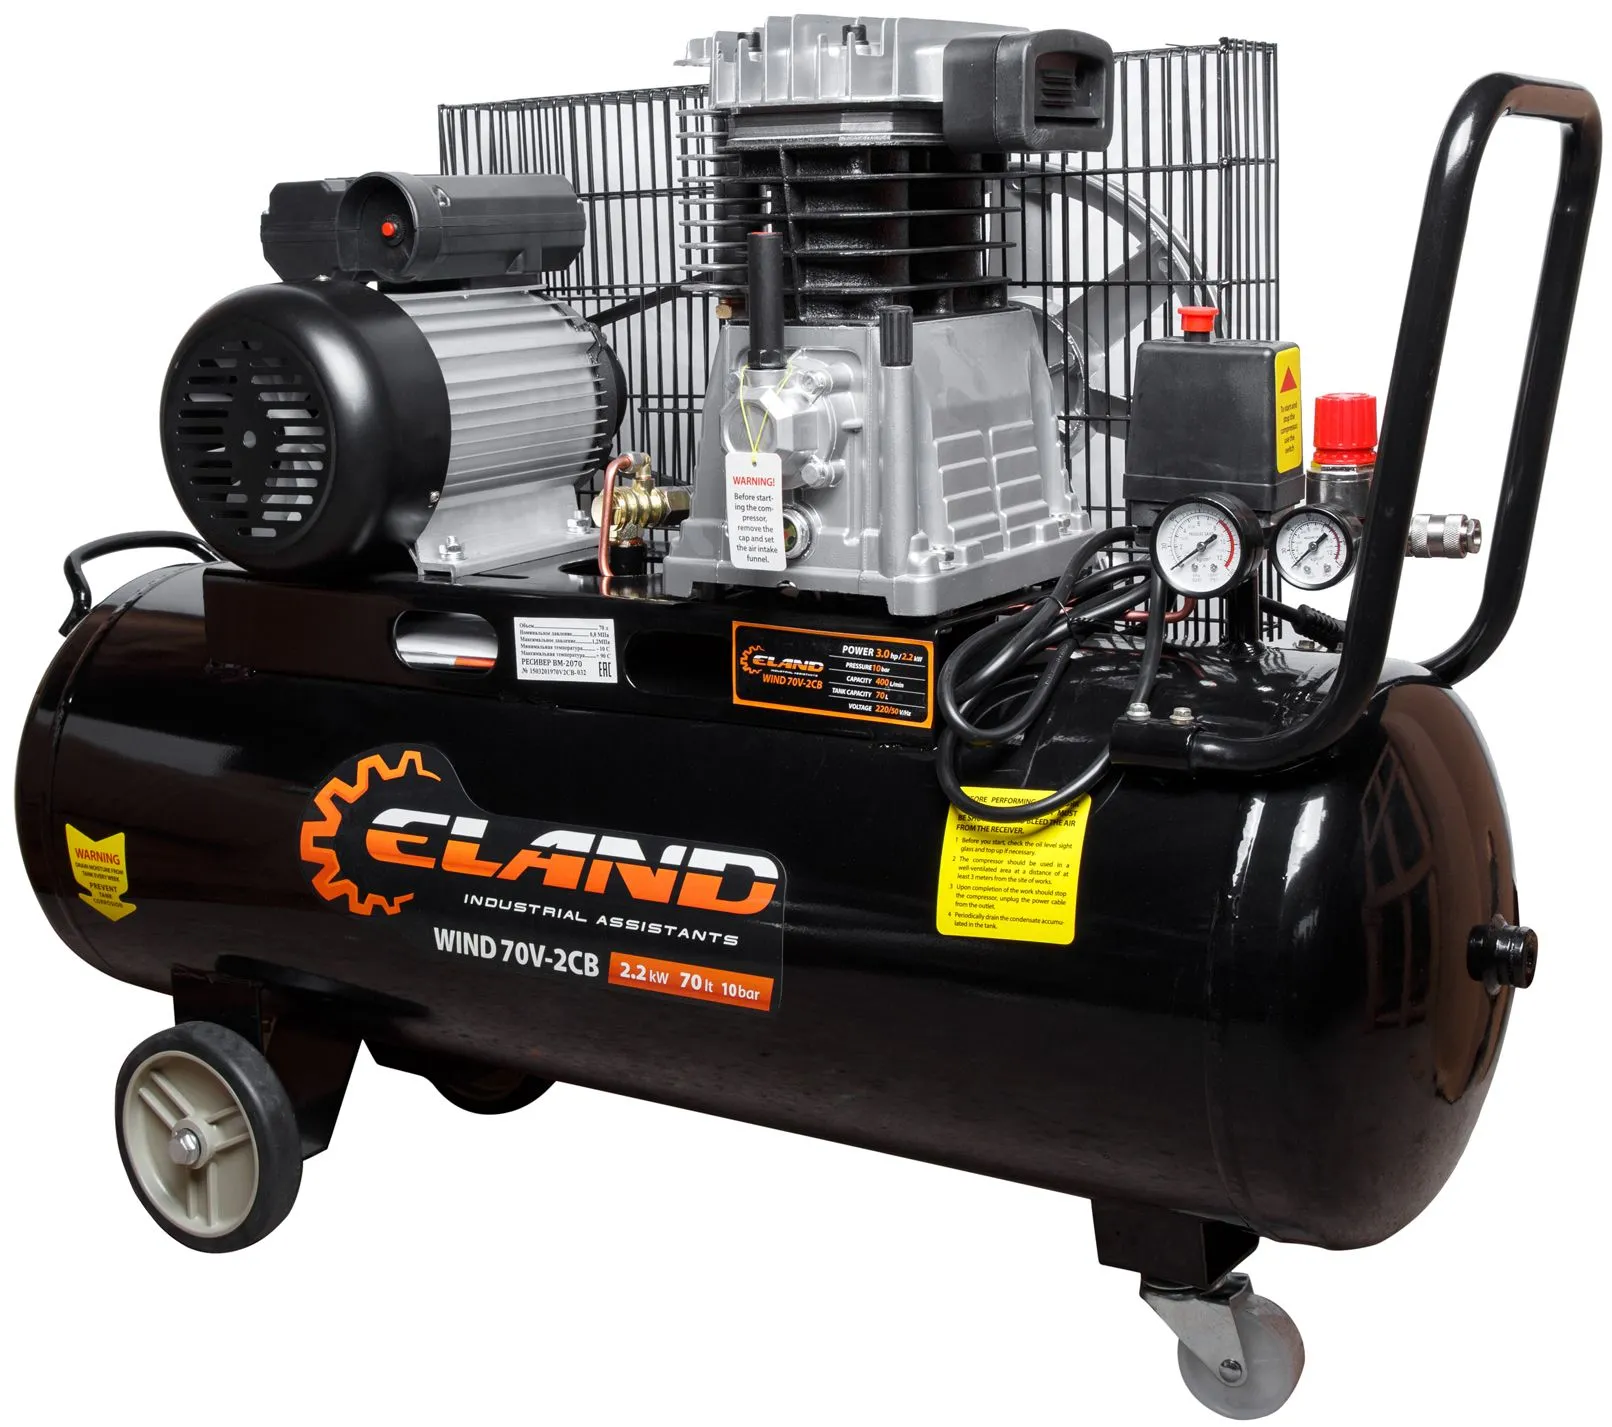 Eland Wind 70V-2CB